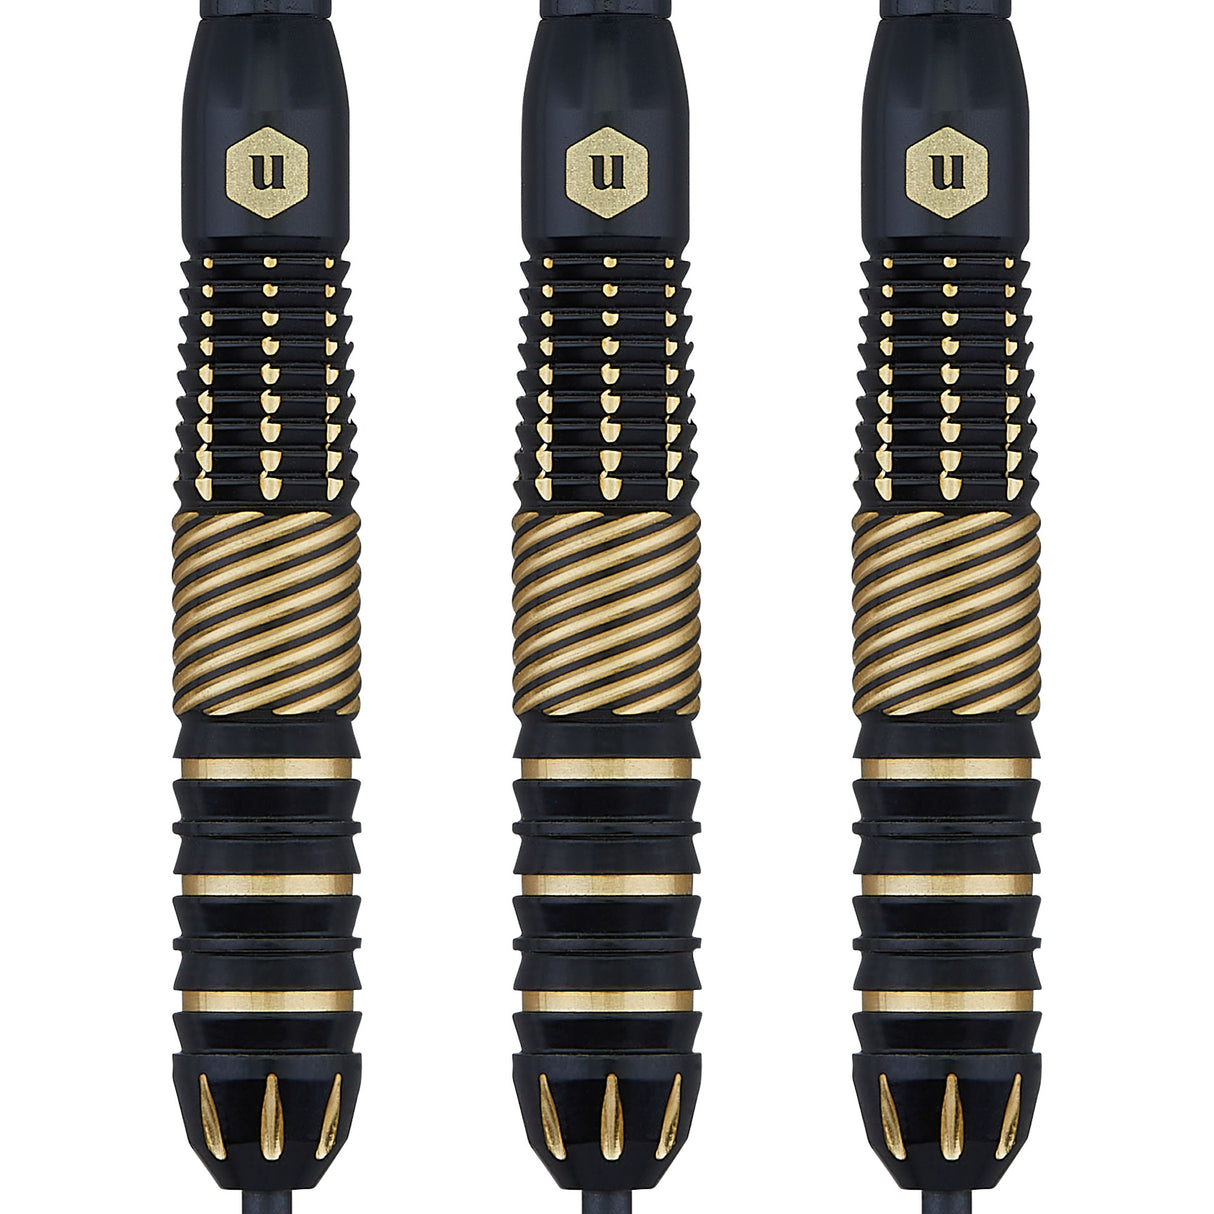 Unicorn Top Brass Darts - Steel Tip - Style 2 - Black & Gold